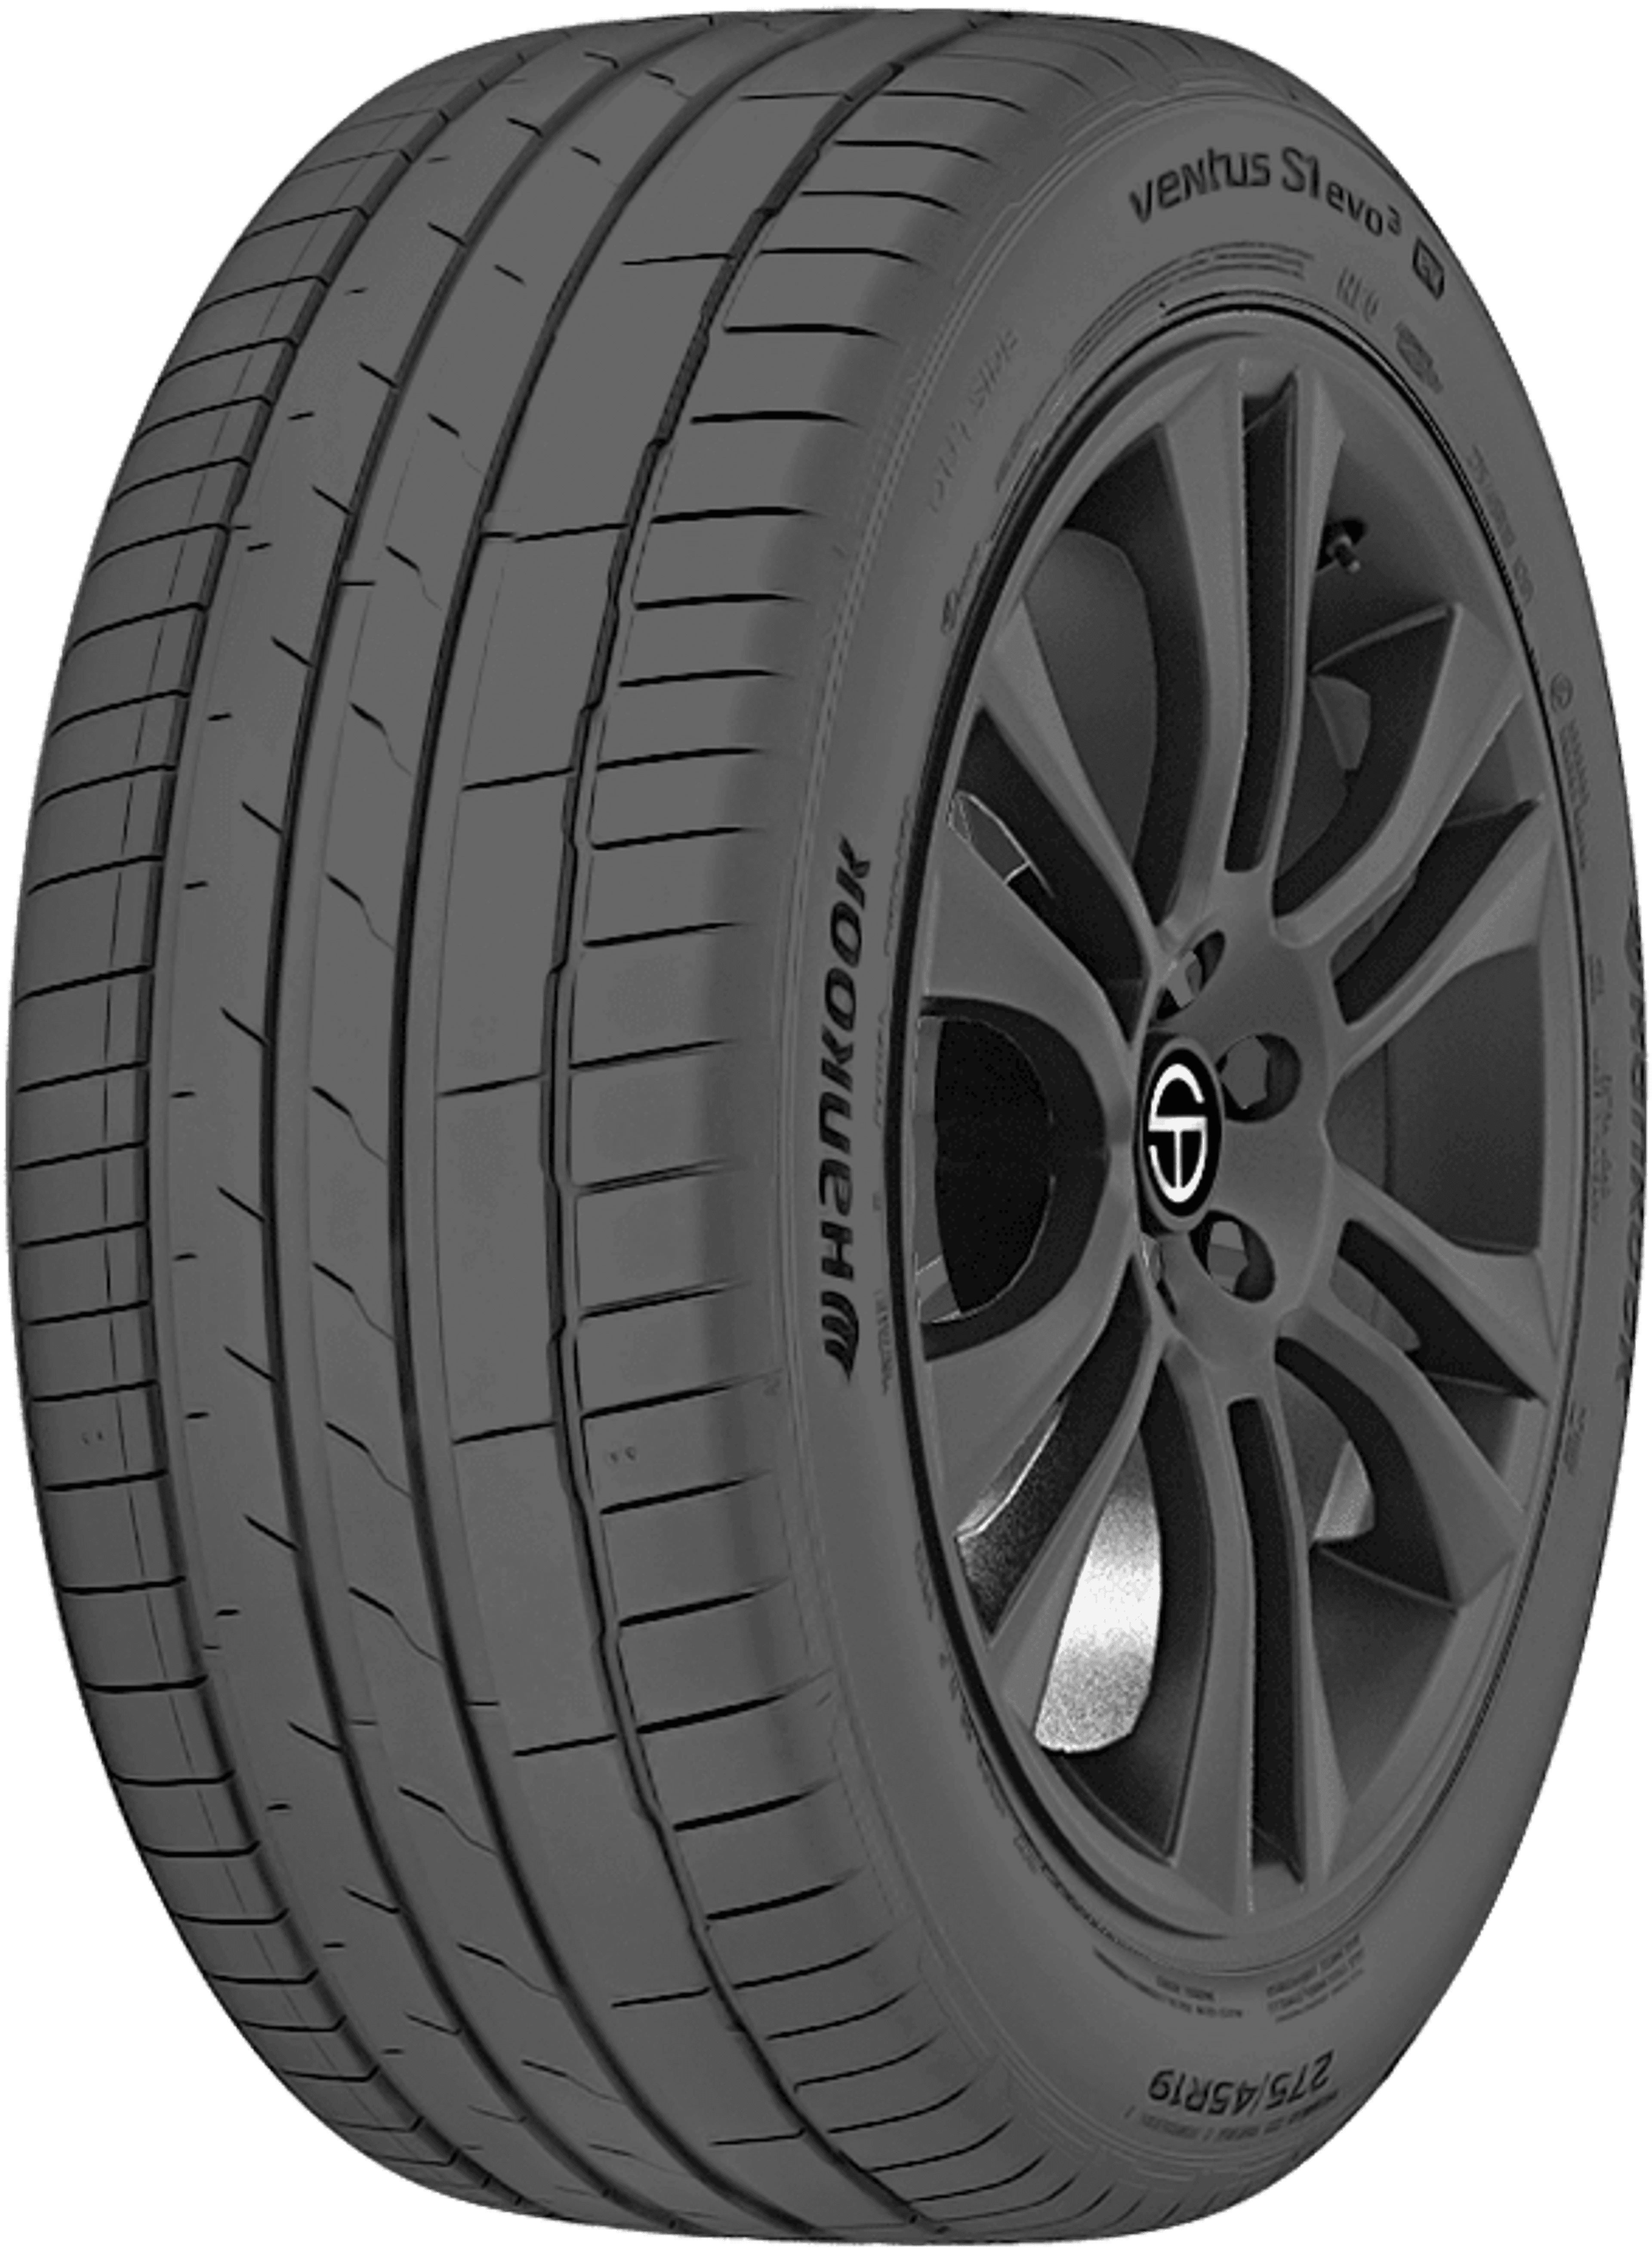 Buy Hankook Ventus S1 evo3 Online (K127) Tires | SimpleTire